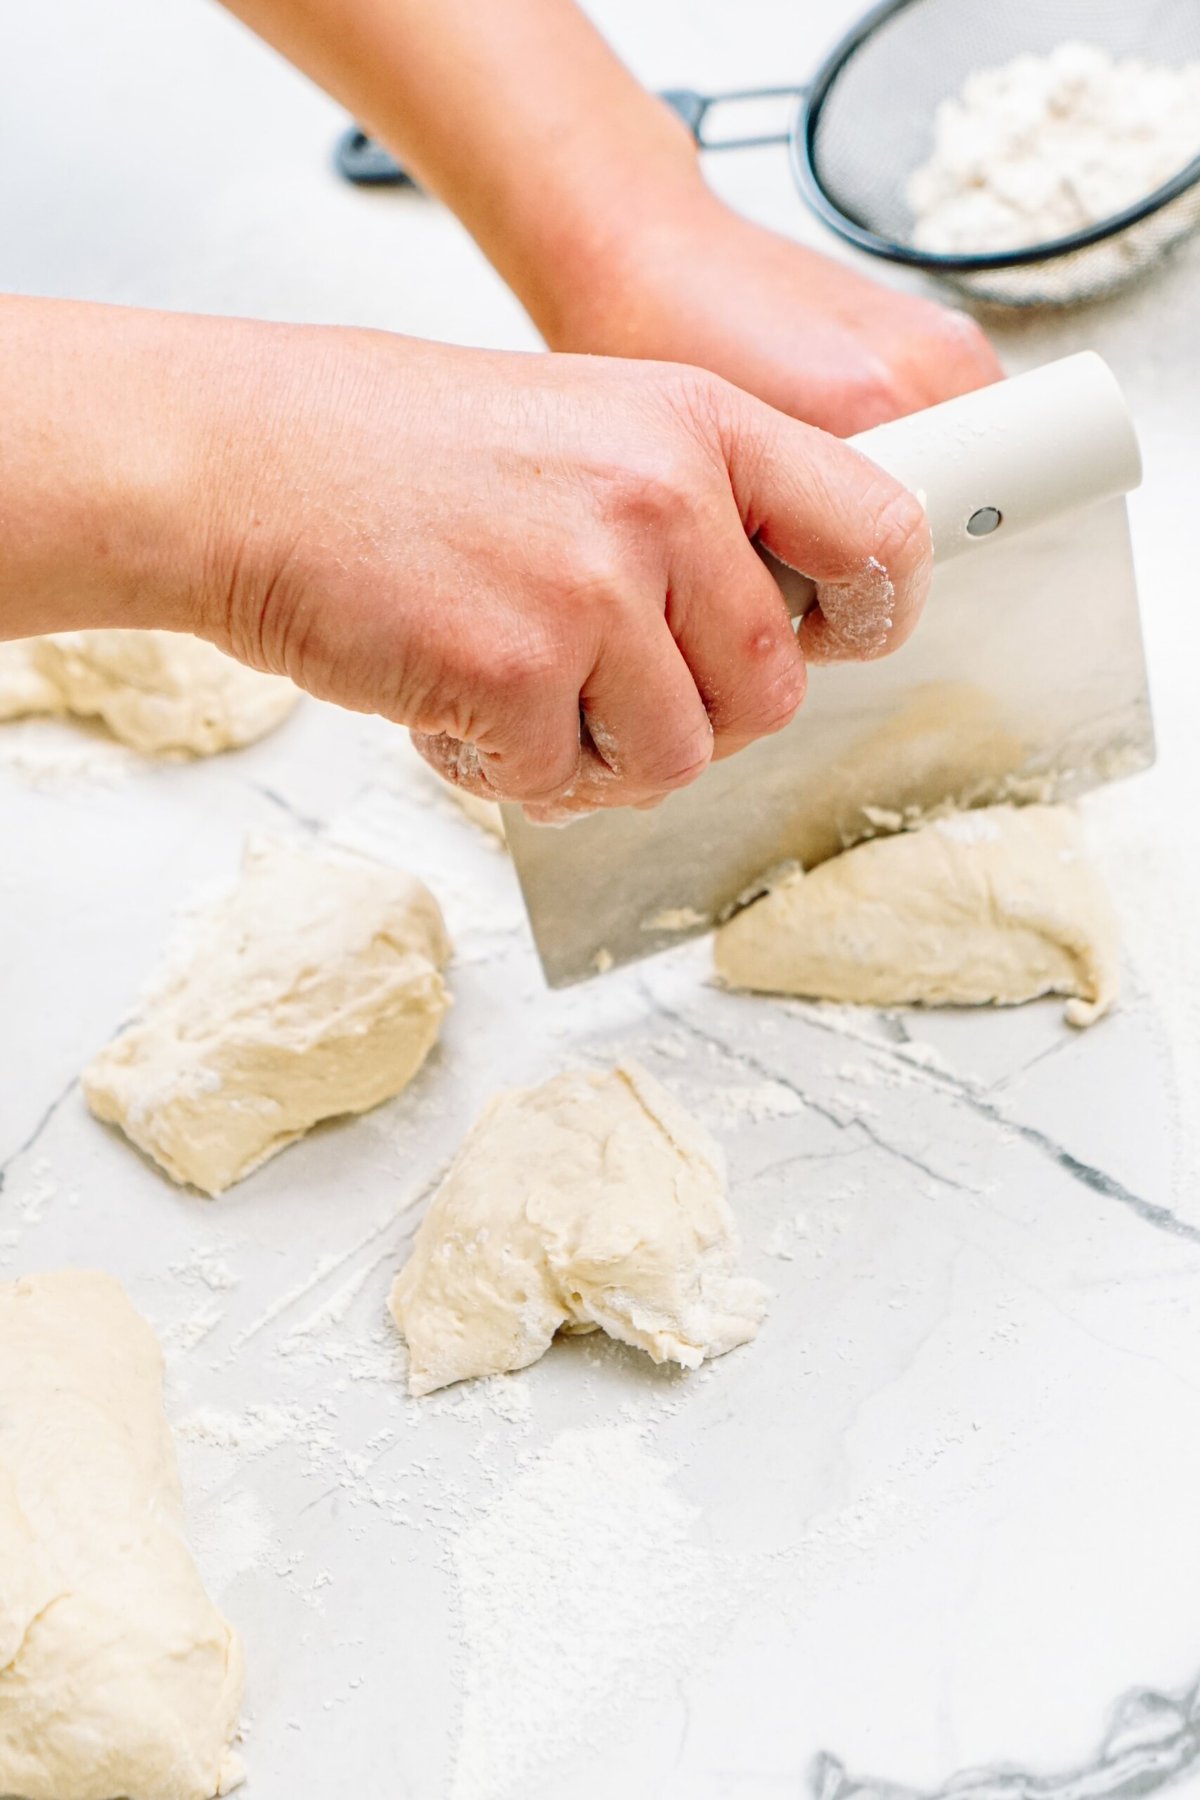 a person cutting dough into small pieces